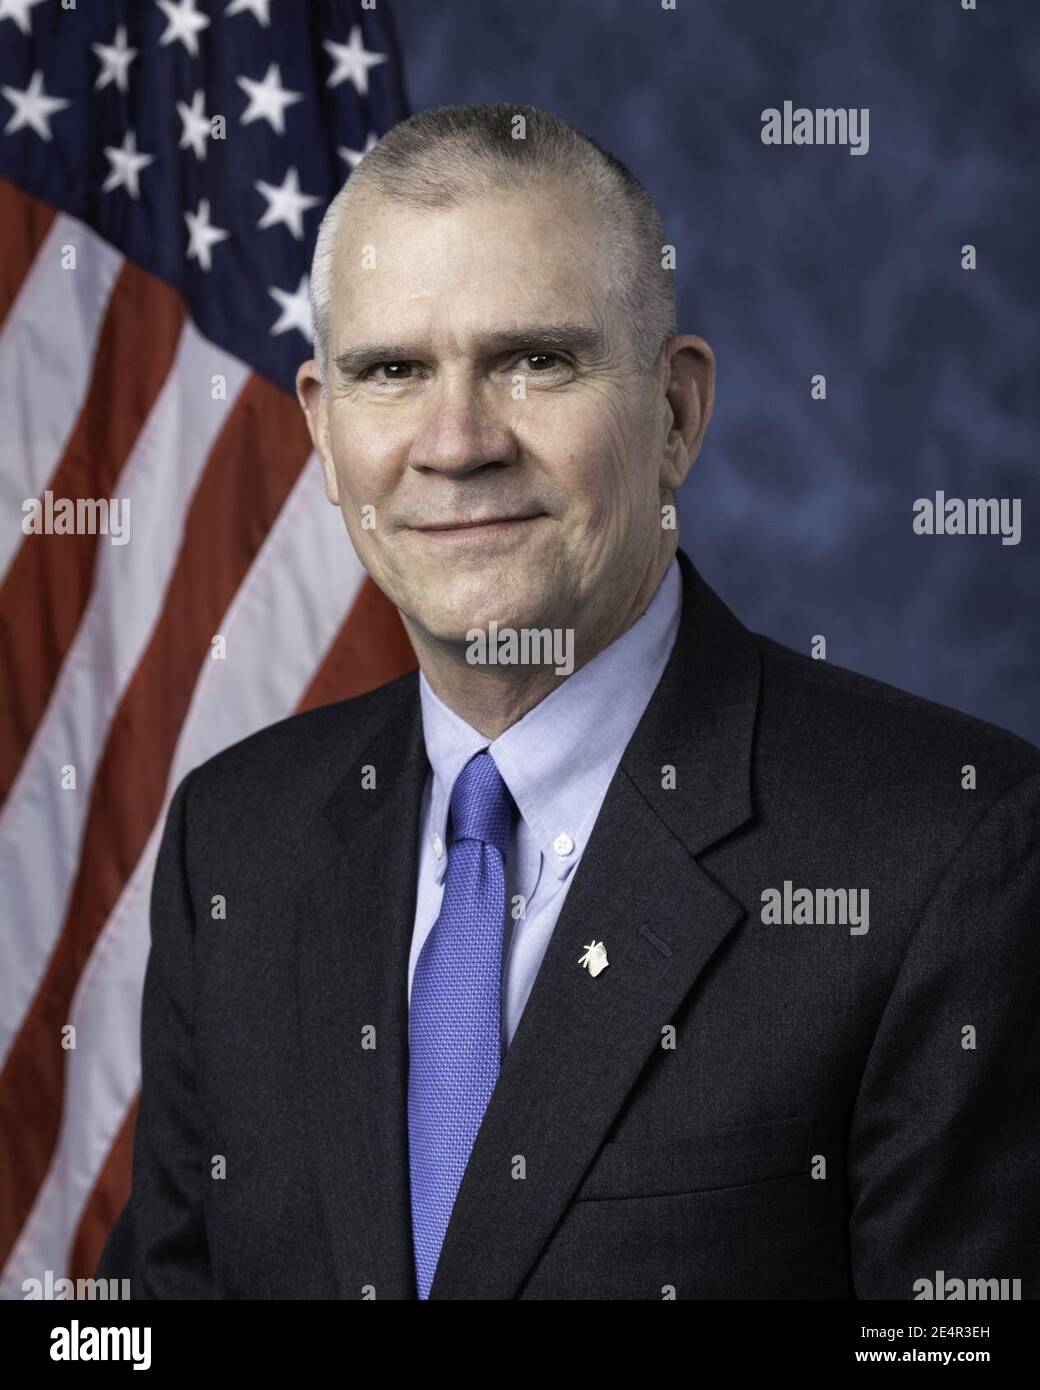 Matt Rosendale 117th U.S Congress. Stock Photo